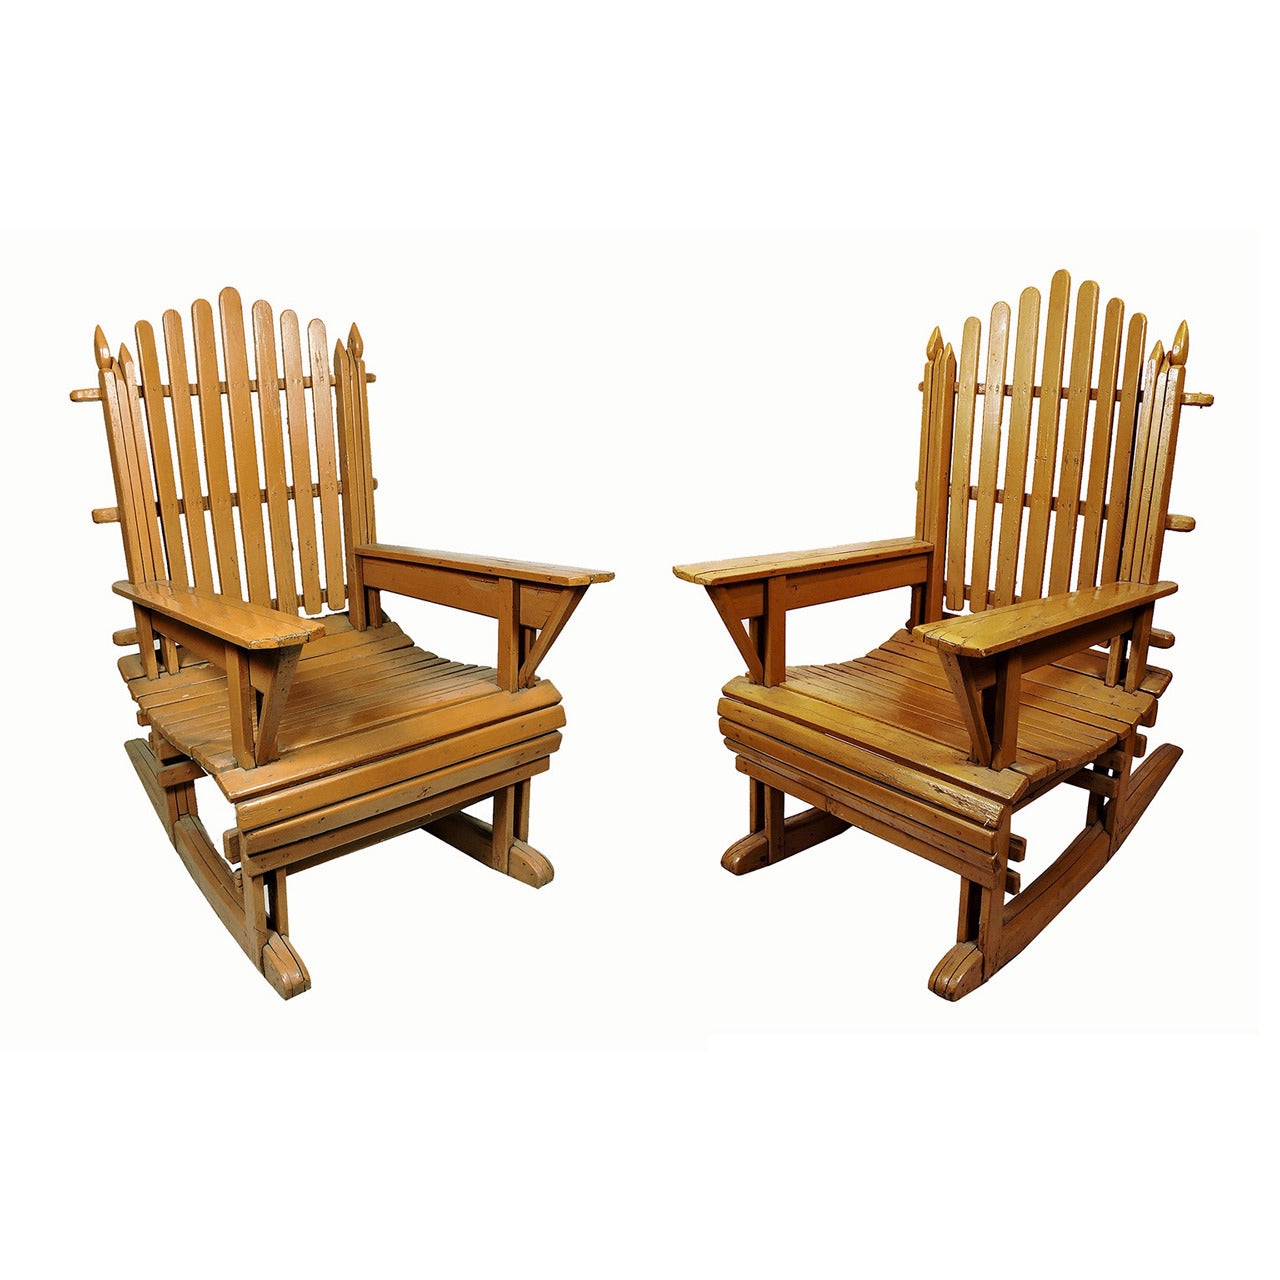 Pair of Vintage Painted Wood Adirondack Rocking Chairs